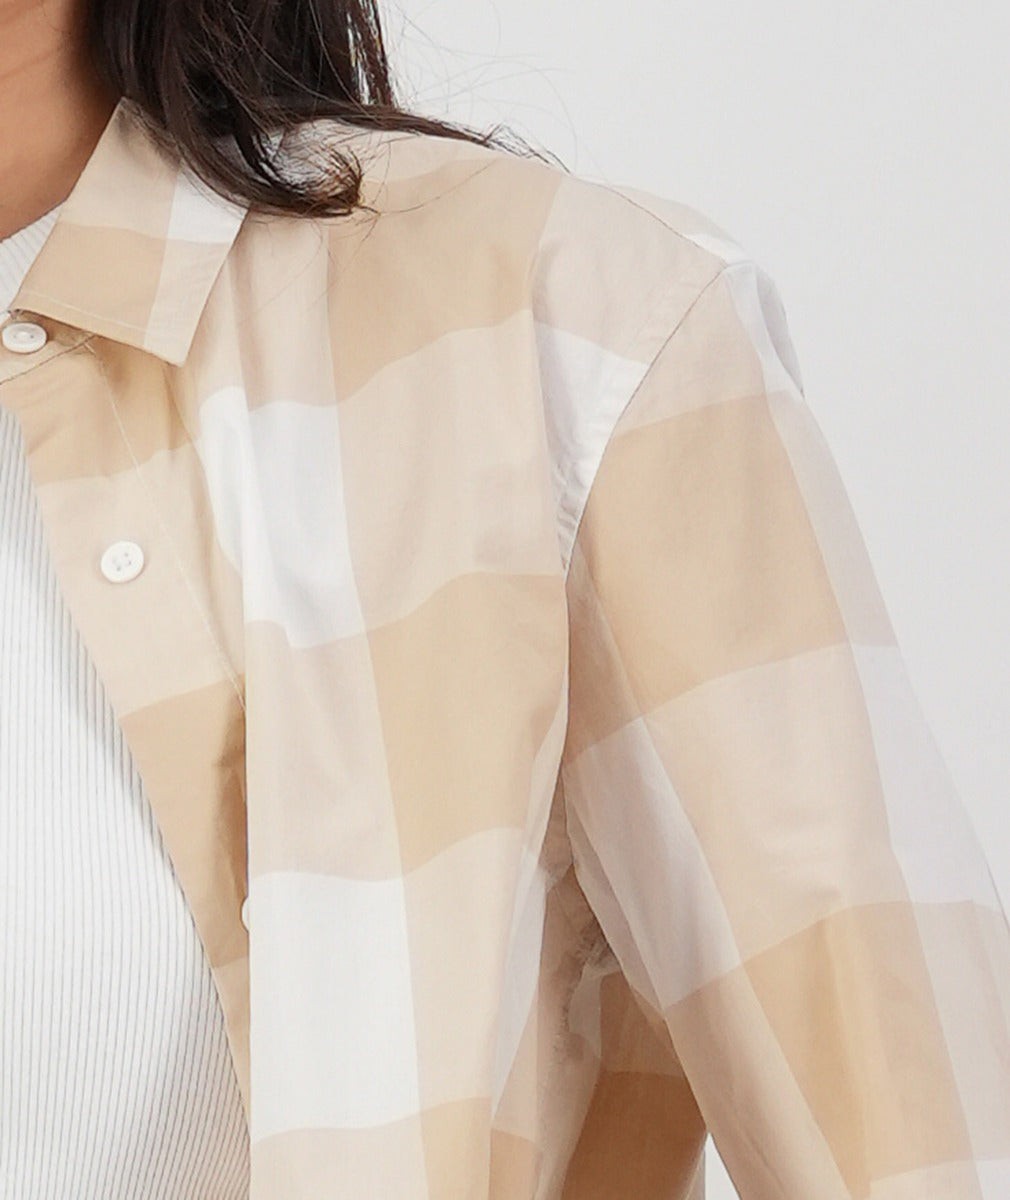 Coromandel Long Sleeve Shirt | Pebble Check - Swanndri - Beechworth Emporium